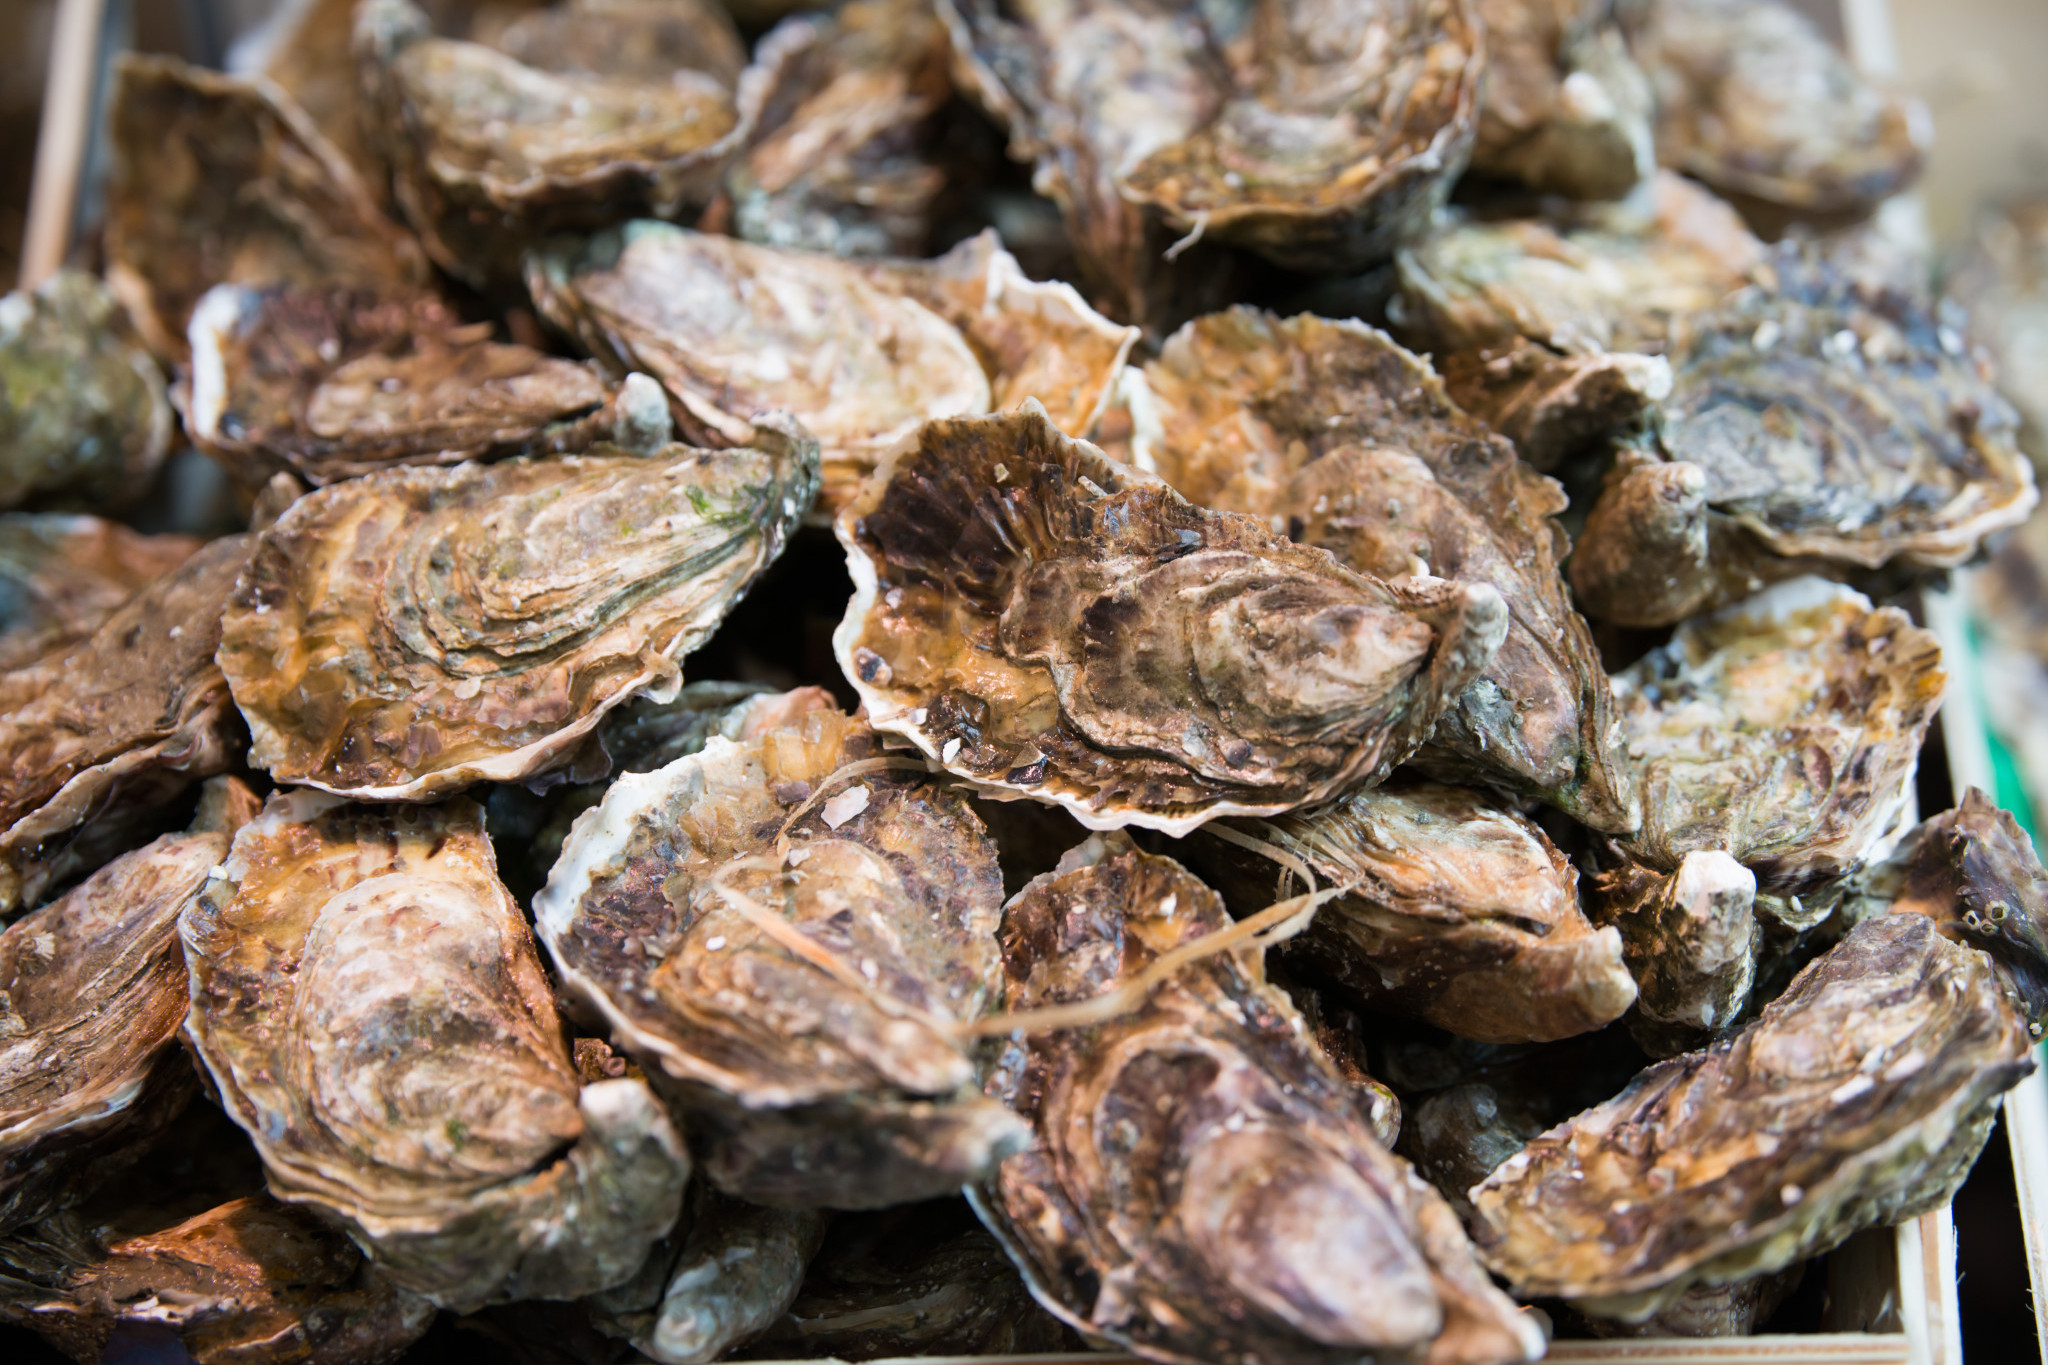 Pest oyster found in Moreton Bay and Brisbane waterways - feature photo